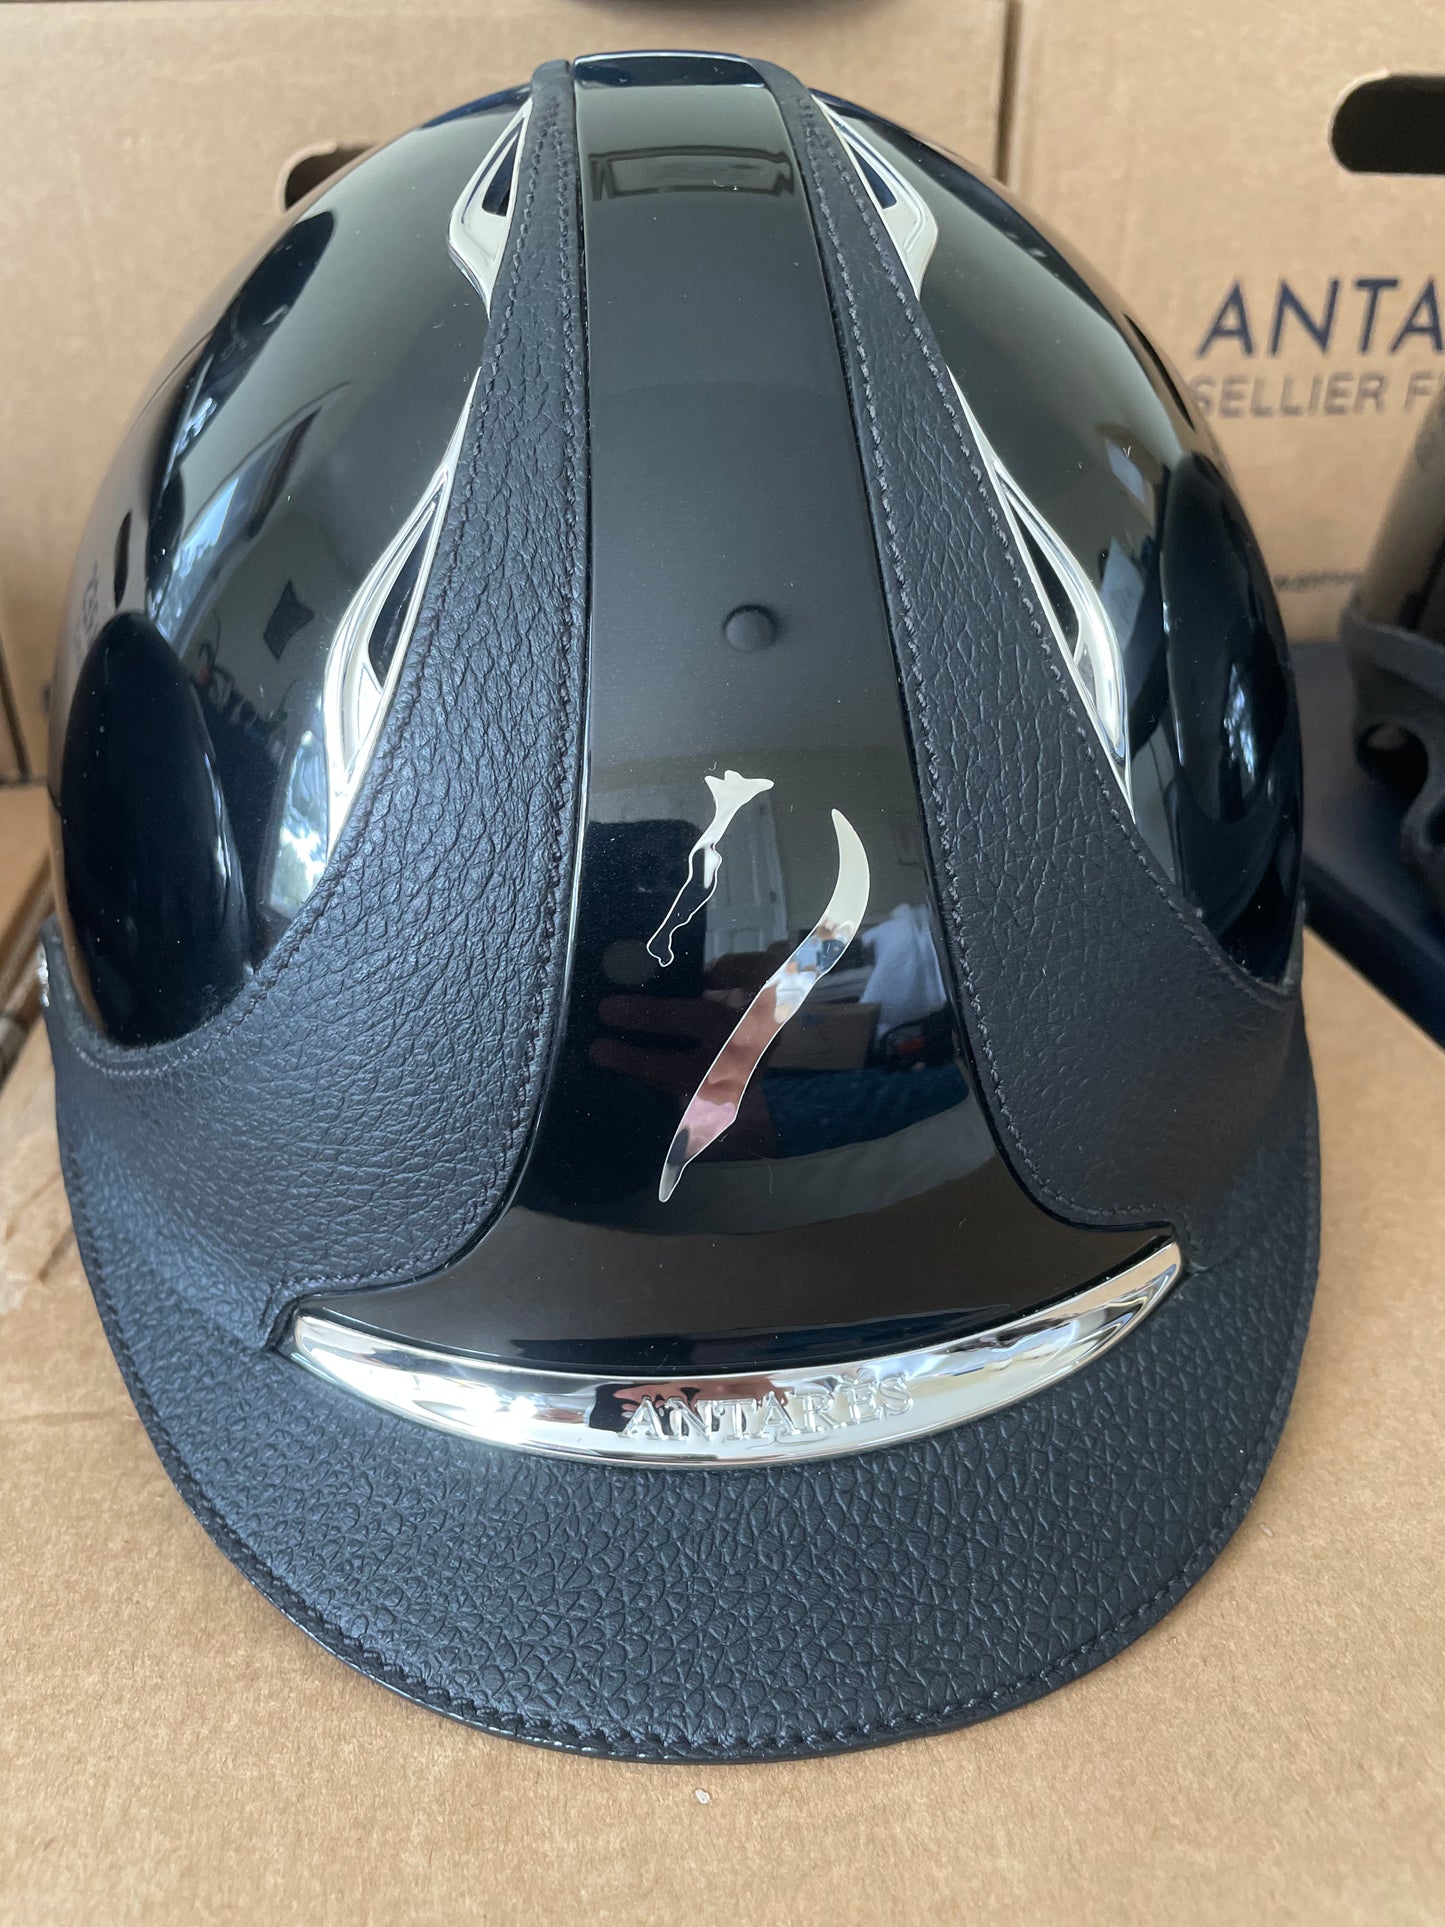 Antares Premium Glossy Helmet, Black, Size Small (53-56), New in Box